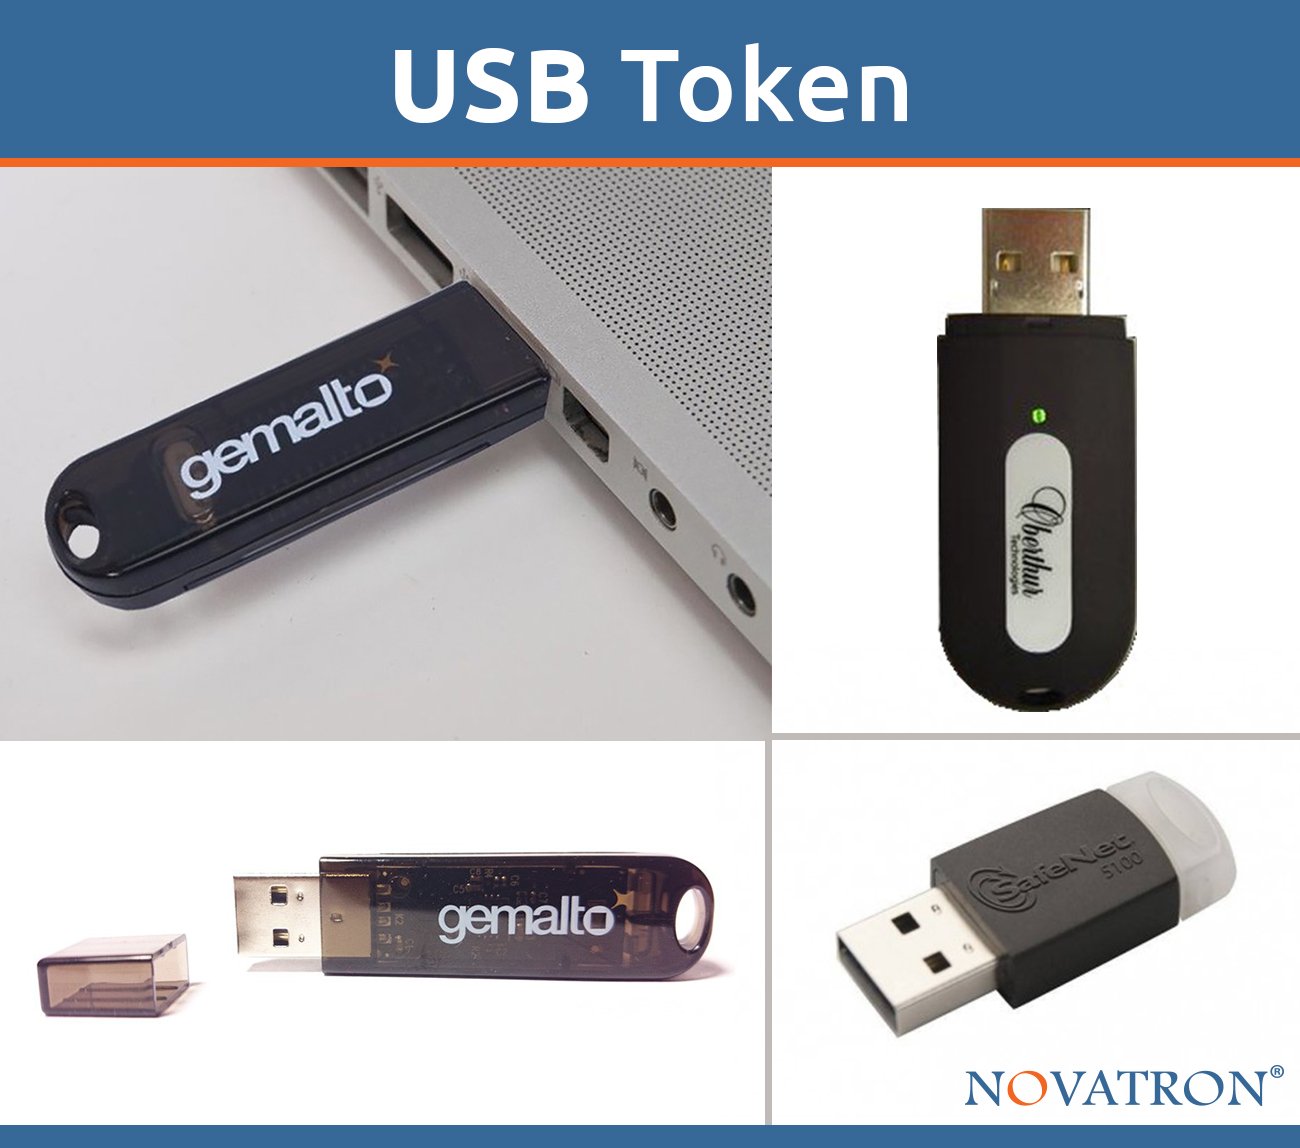 More information about "USB Token – Χρήσιμες πληροφορίες για την ηλεκτρονική υπογραφή"